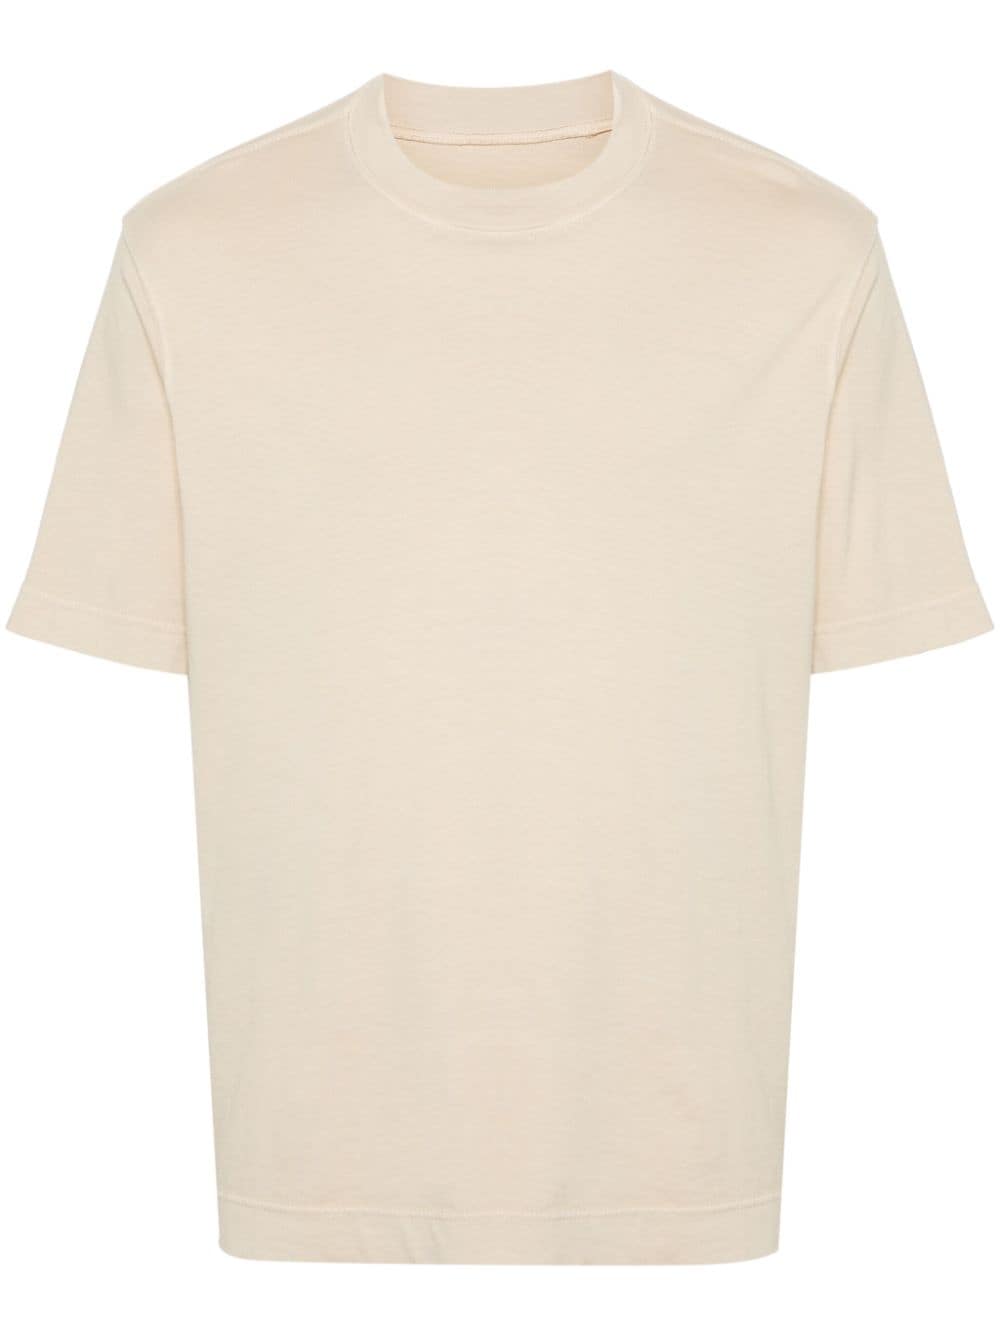 Circolo 1901 T-shirt girocollo - Toni neutri